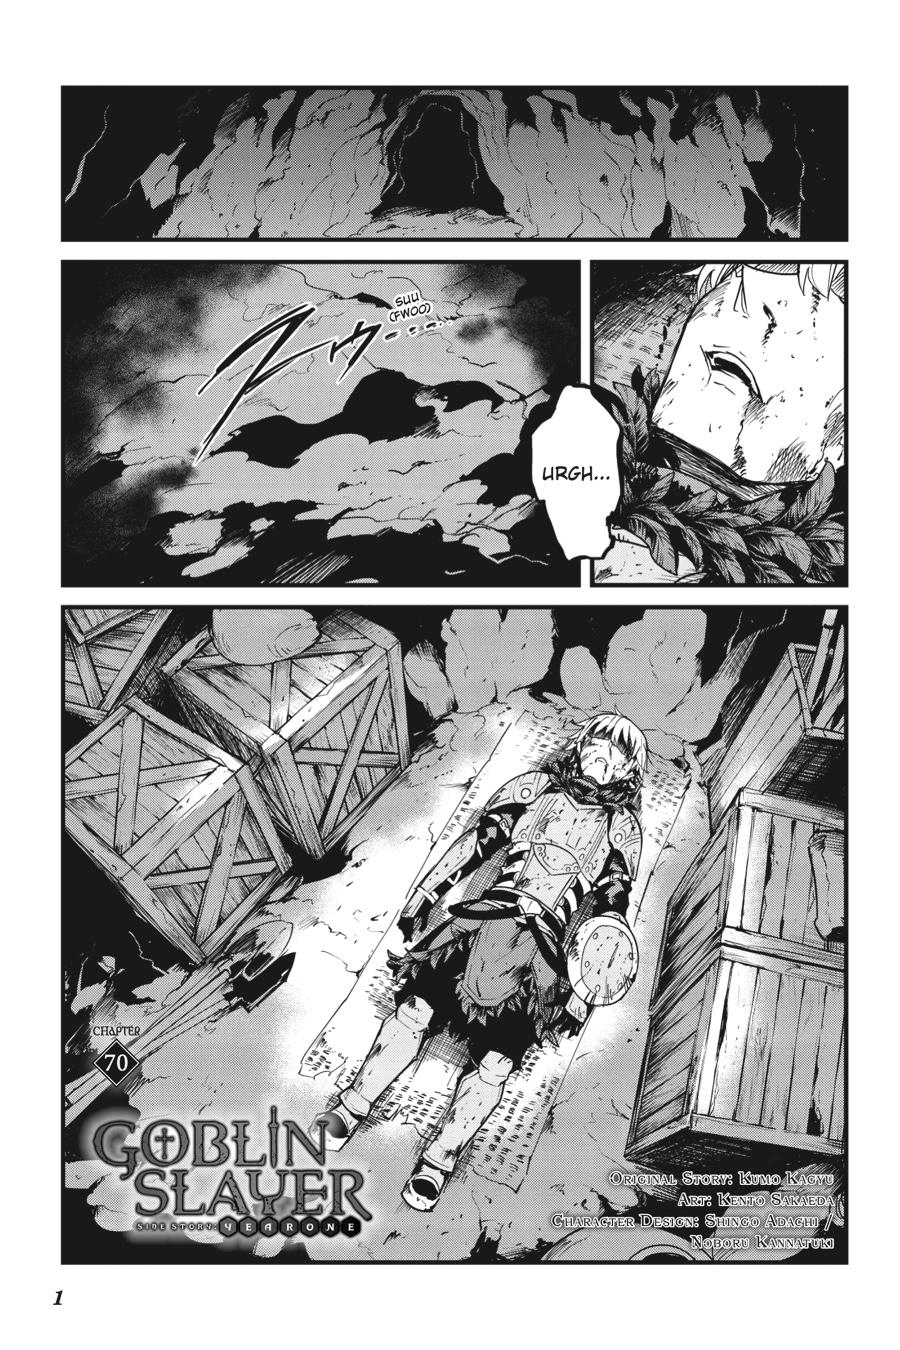 Read Goblin Slayer Gaiden Year One Manga English All Chapters Online Free Mangakomi 2118